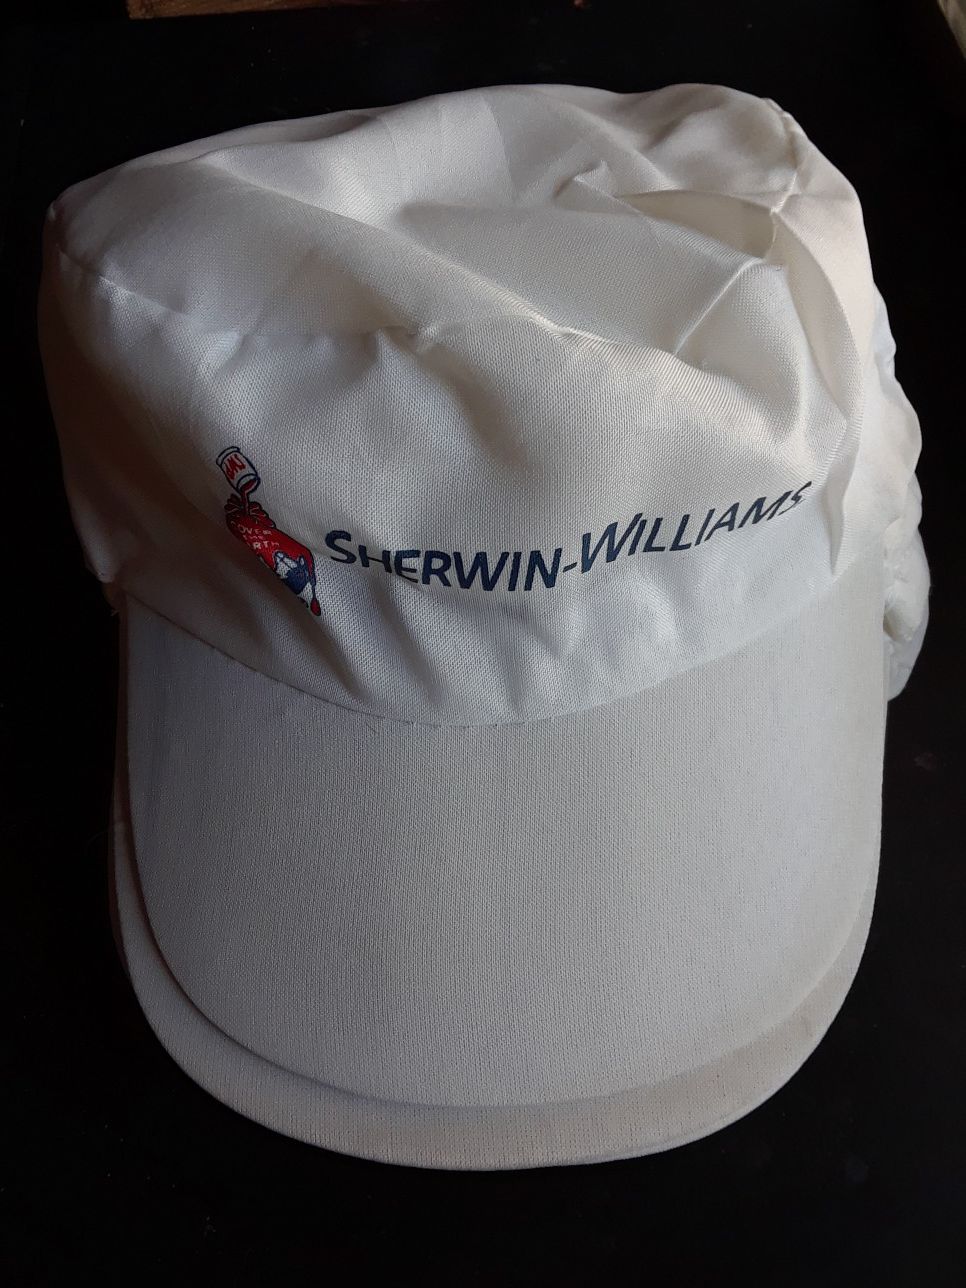 10 Sherwin-Williams Painters Hats